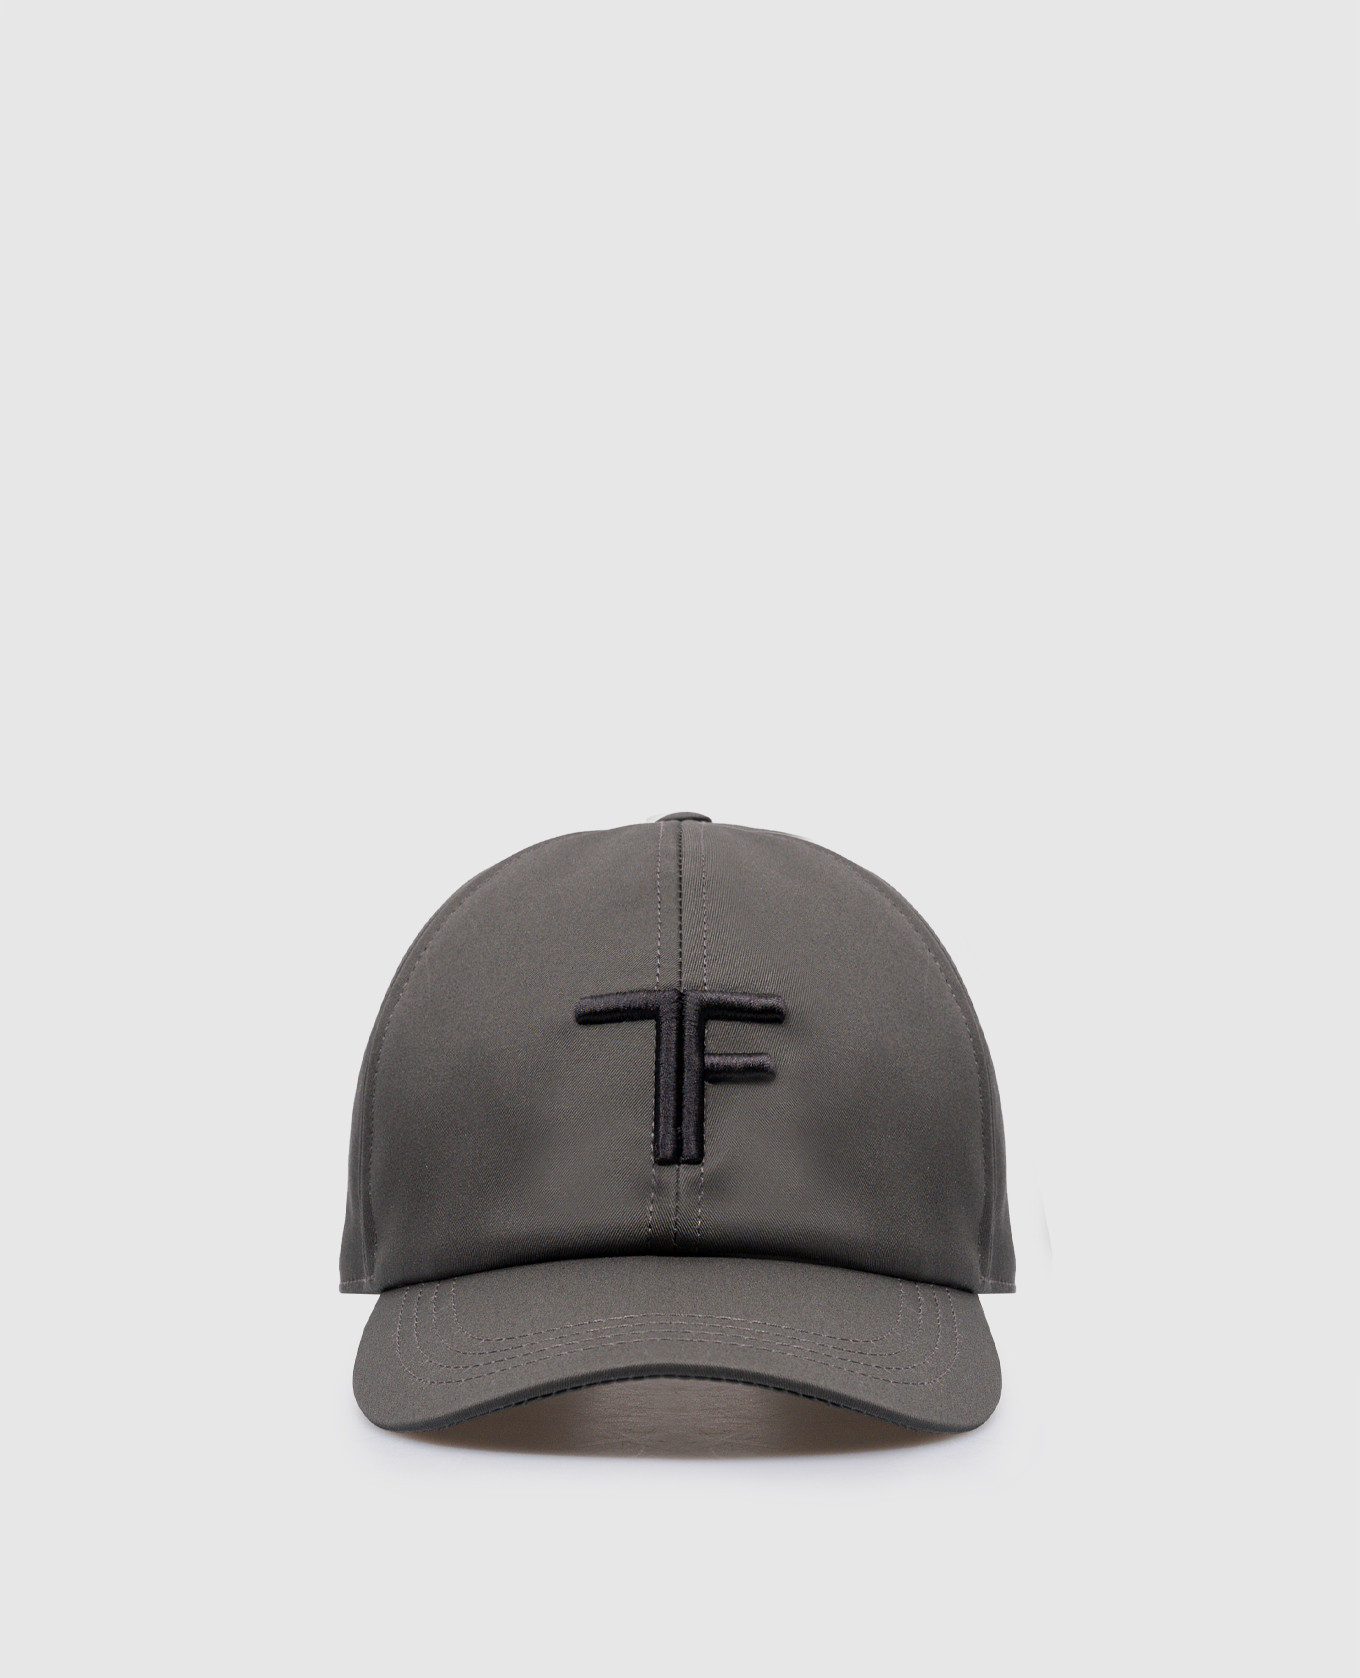 Gray cap with textured logo